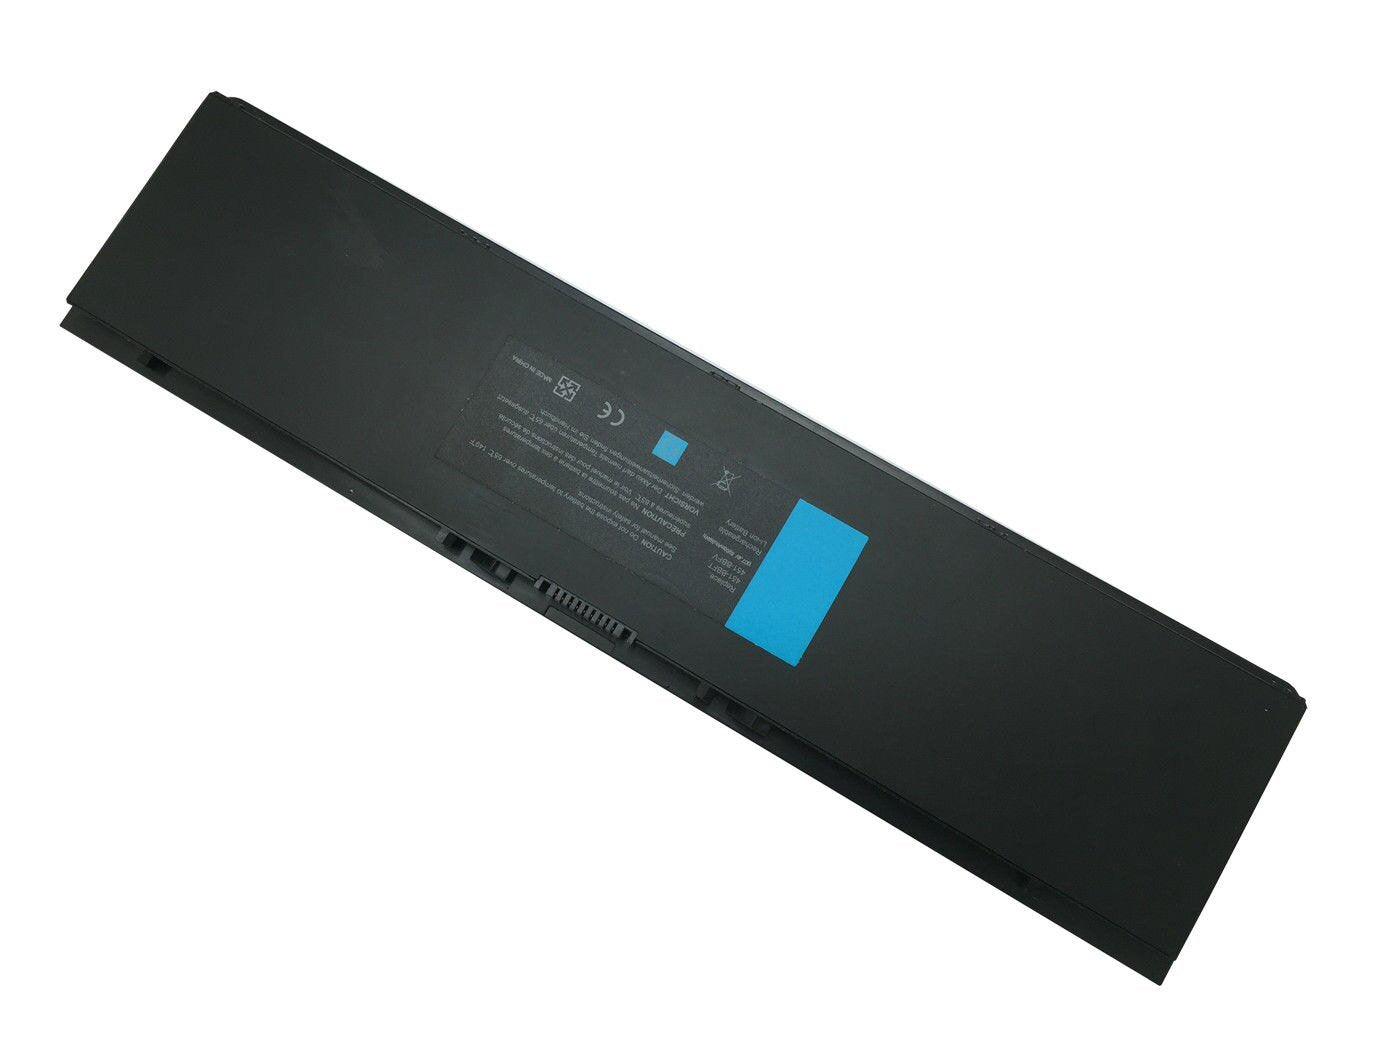 Dell Latitude E7440 Series 5K1GW Laptop Battery - eBuy UAE